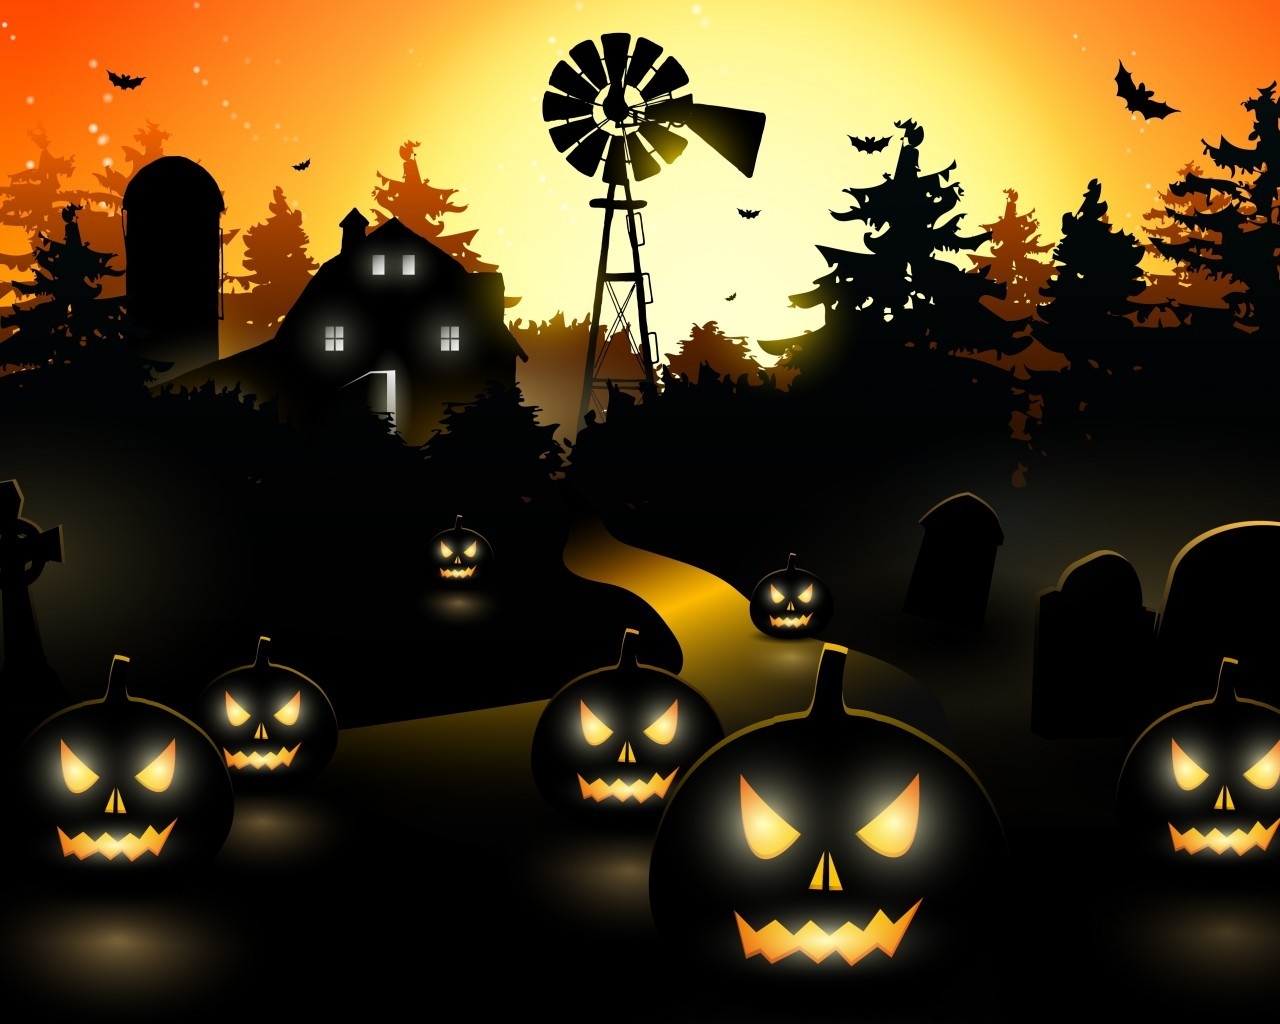 Halloween Black City for 1280 x 1024 resolution